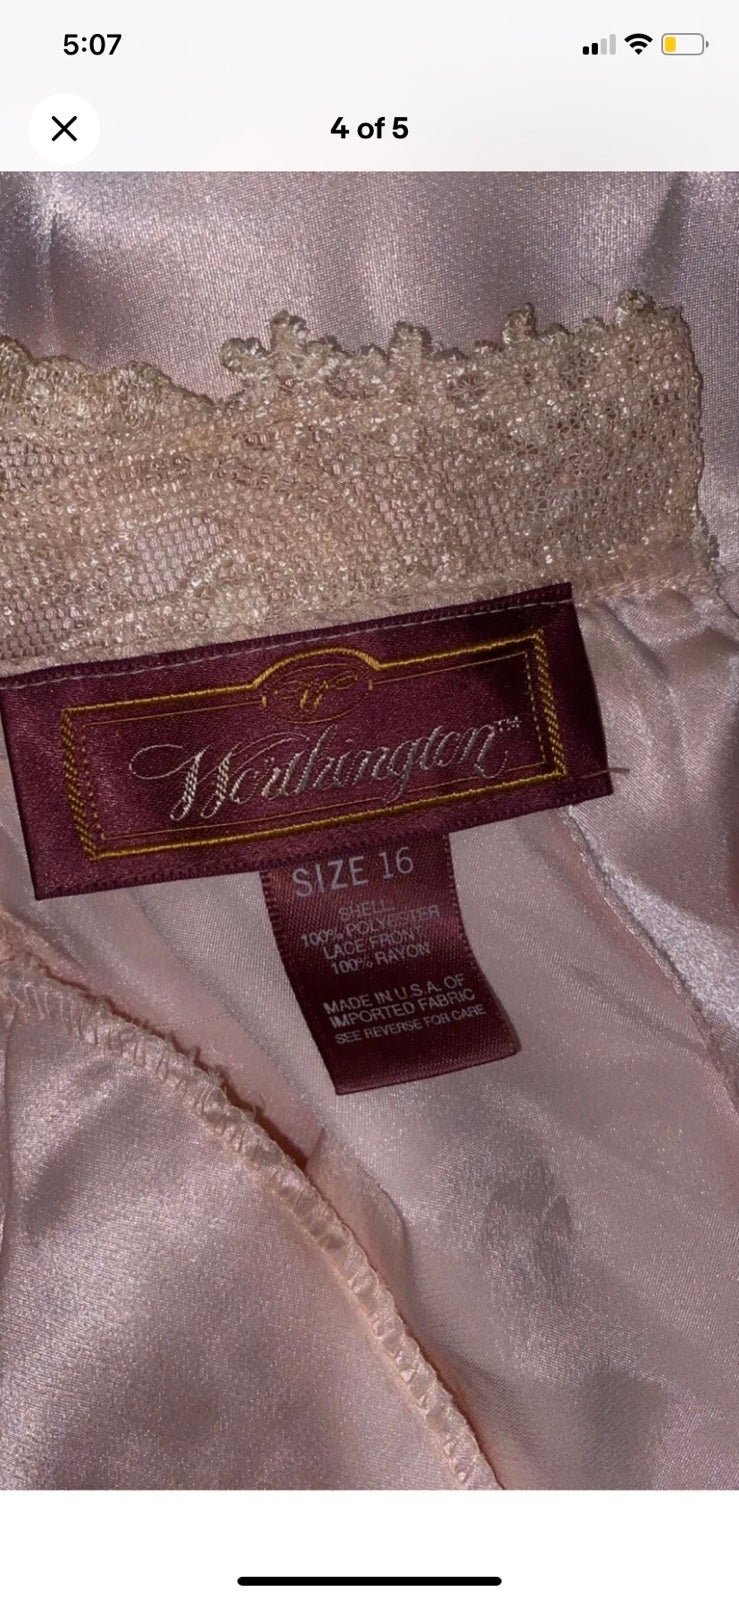 Great Vintage Worthington Baby Pink / Blush Top Size 16 NOU20HG4z well sale